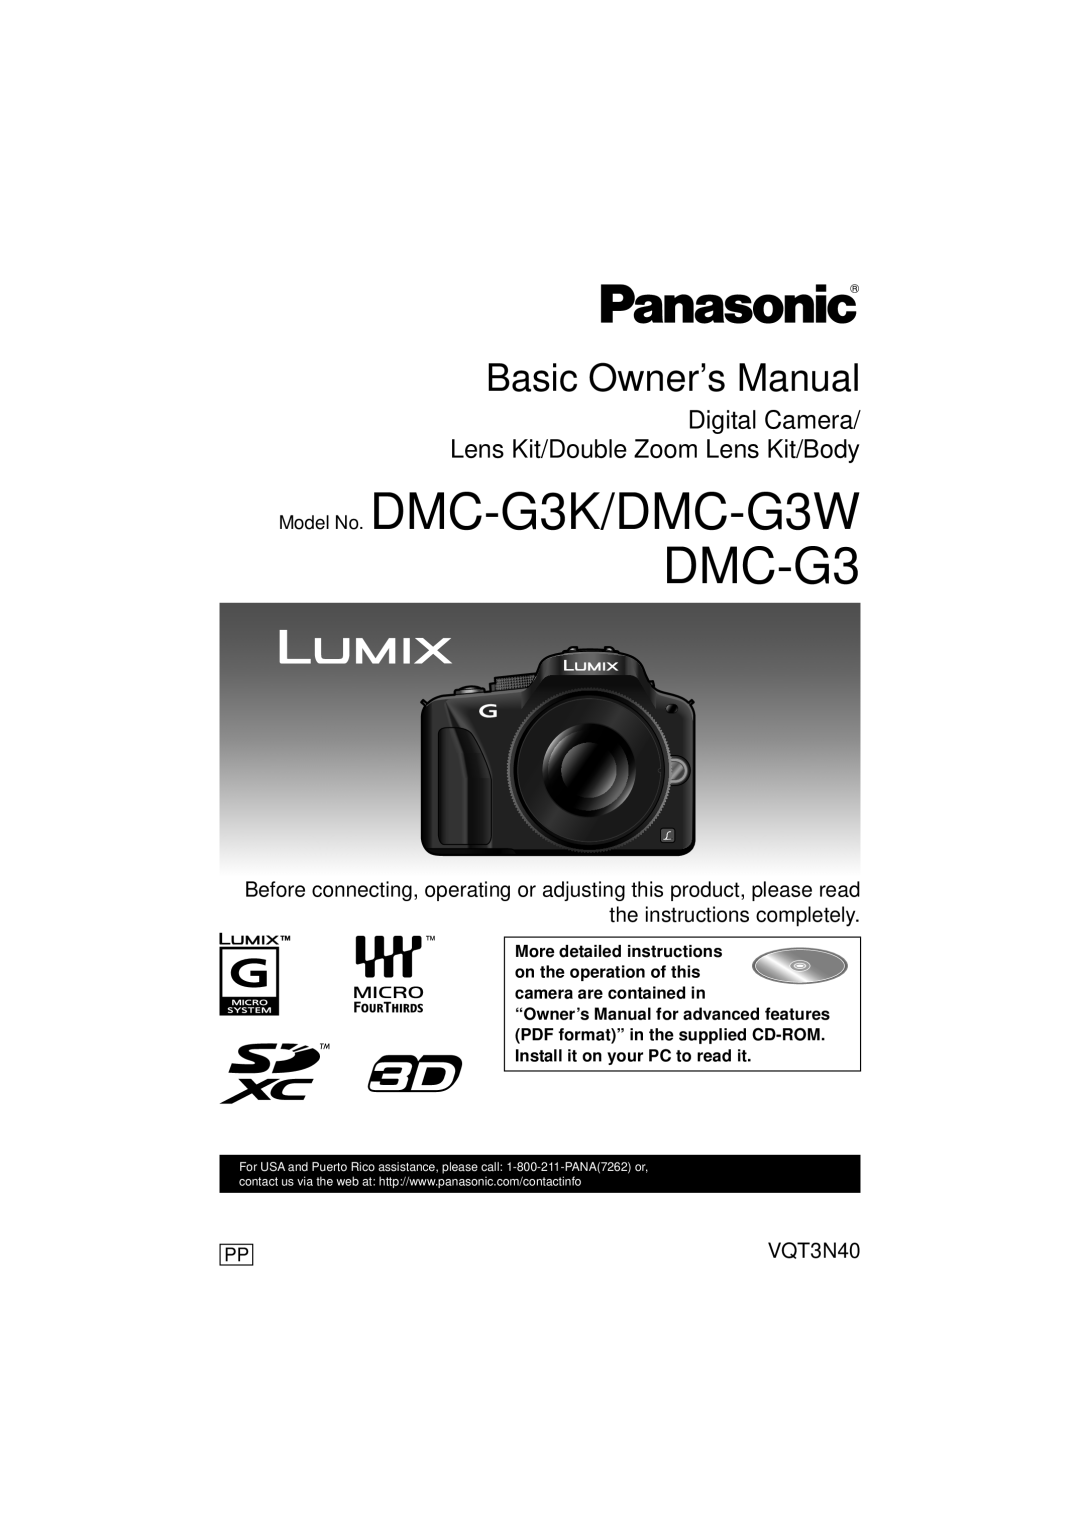 Panasonic owner manual VQT3N40, More detailed instructions, Model No. DMC-G3K/DMC-G3W DMC-G3, Basic Owner’s Manual 